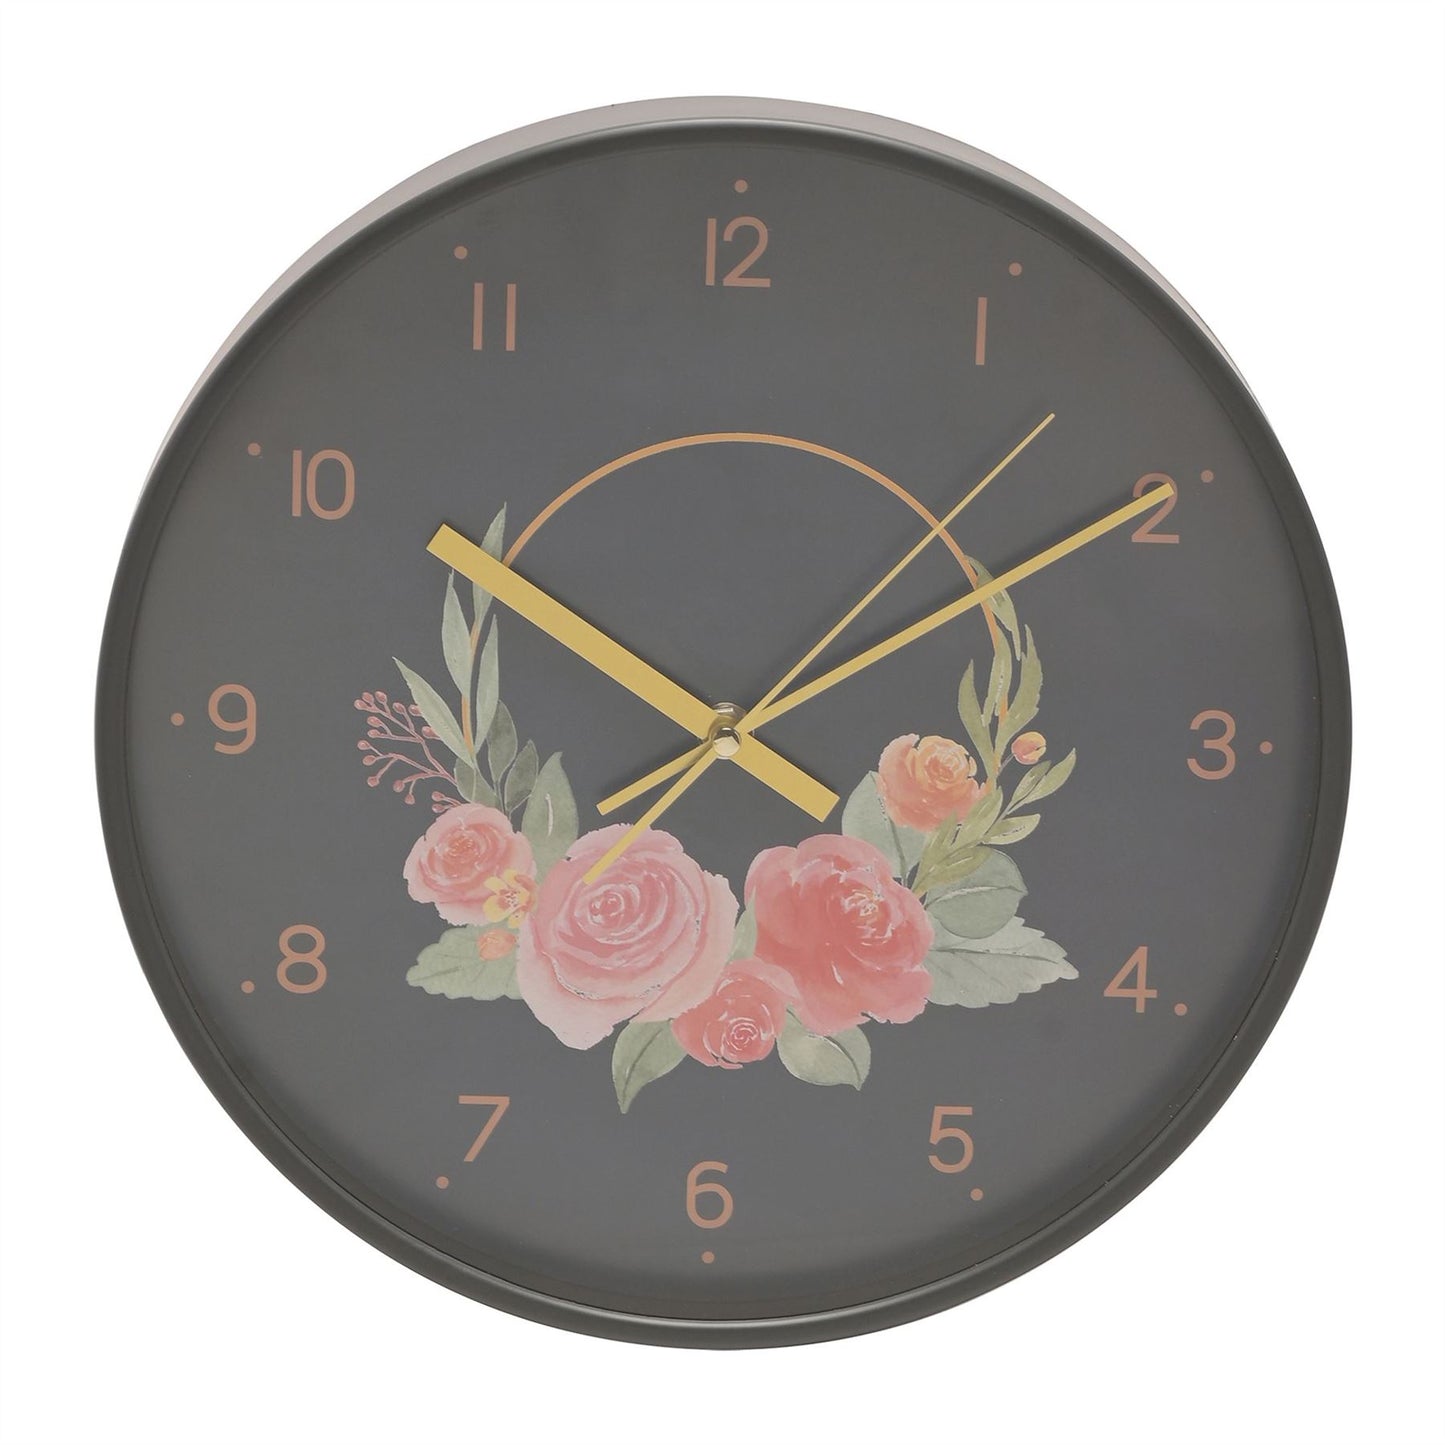 Hometime Round Wall Clock Rose Design 12"